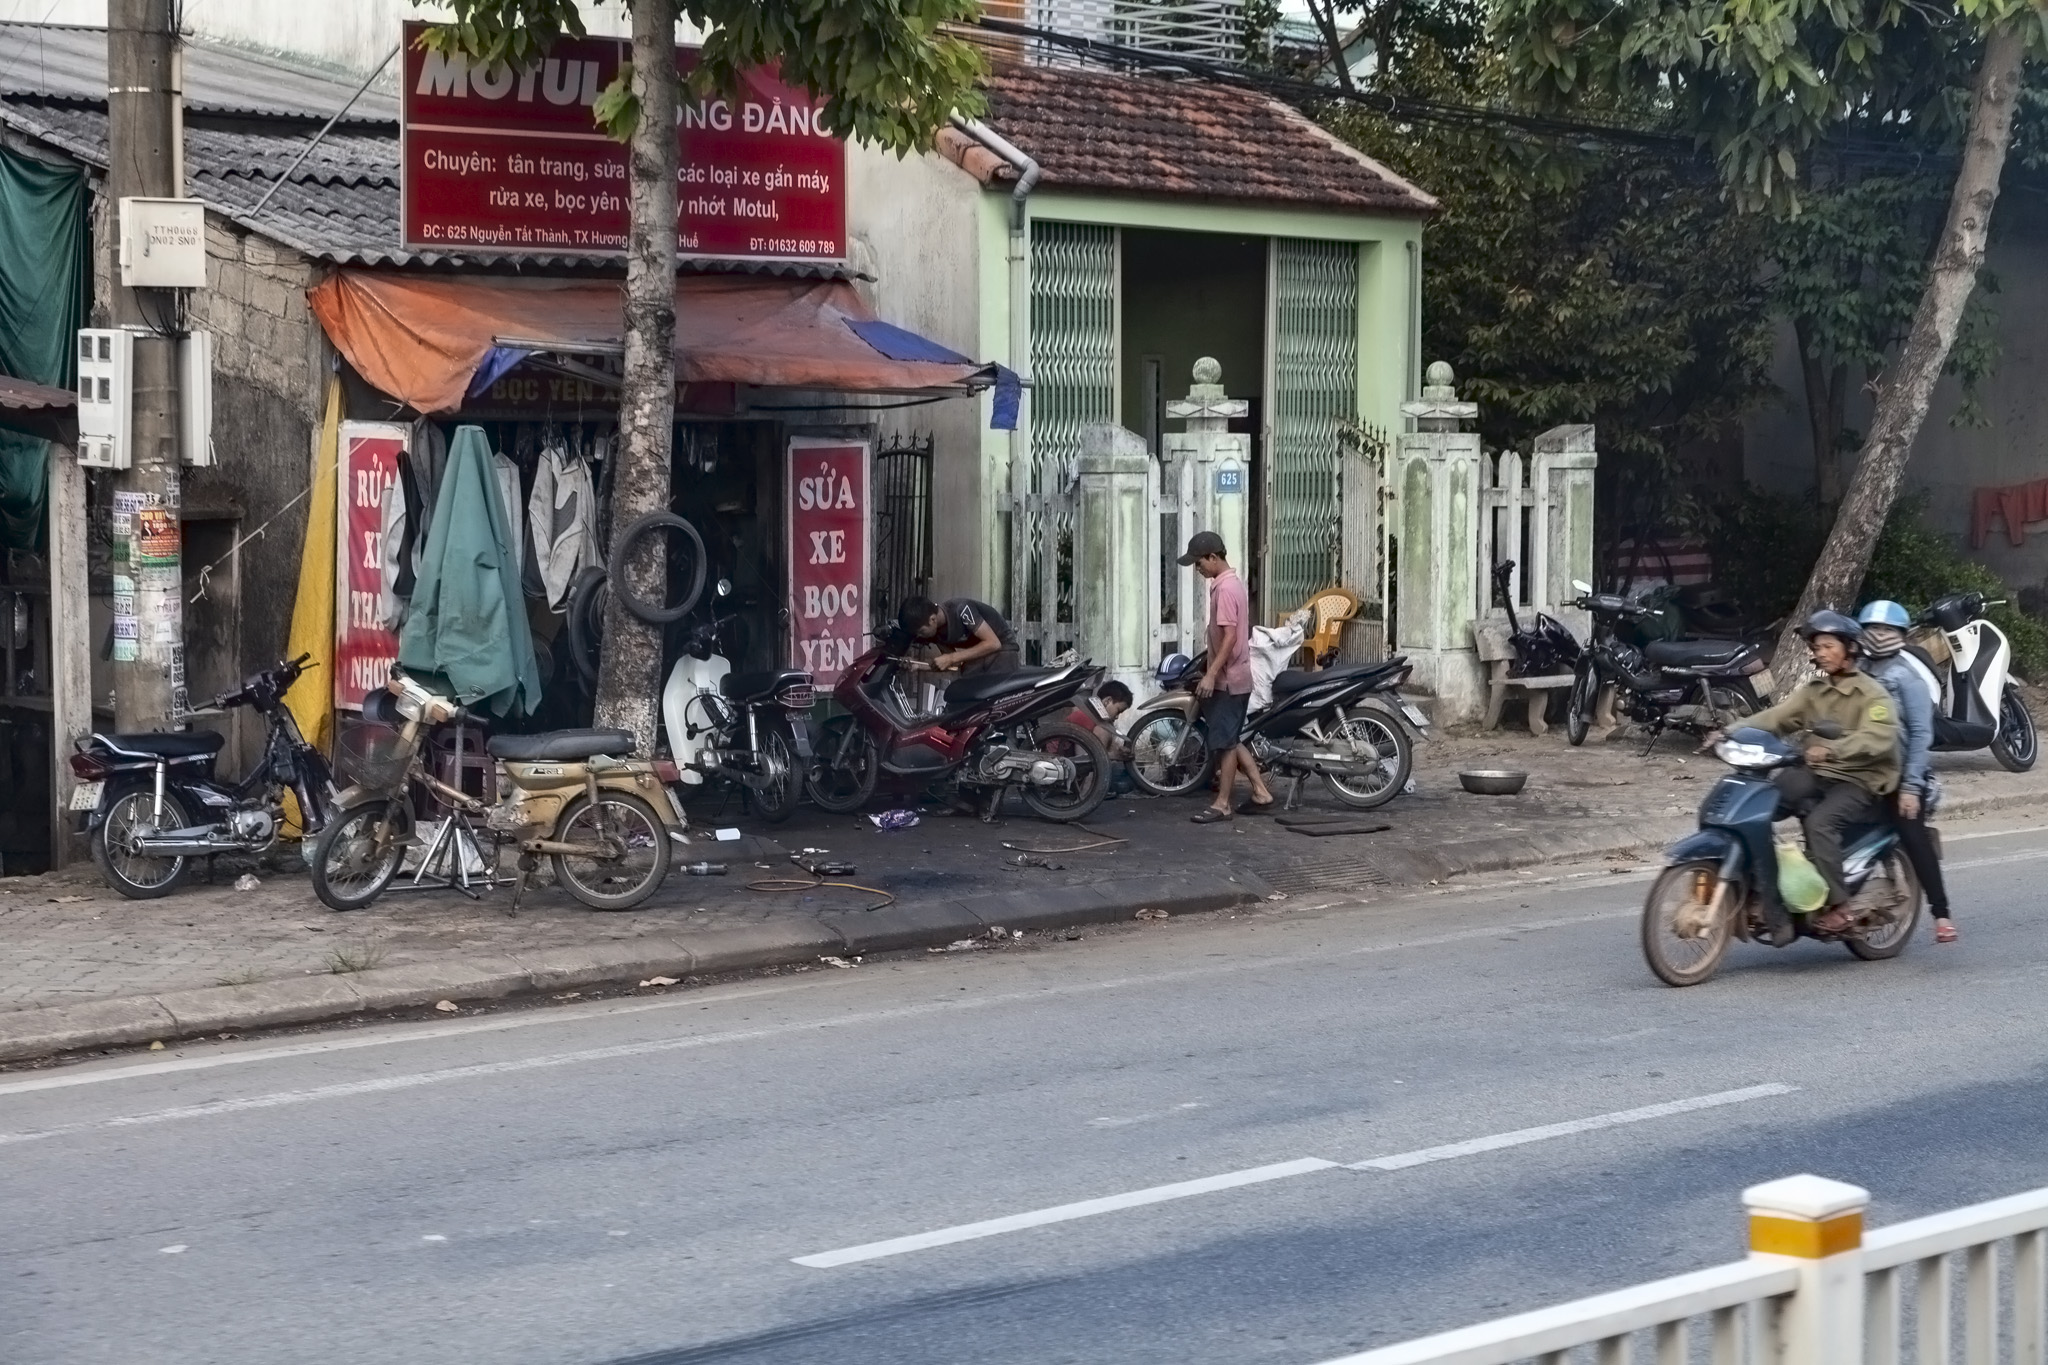 Vietnamese Road